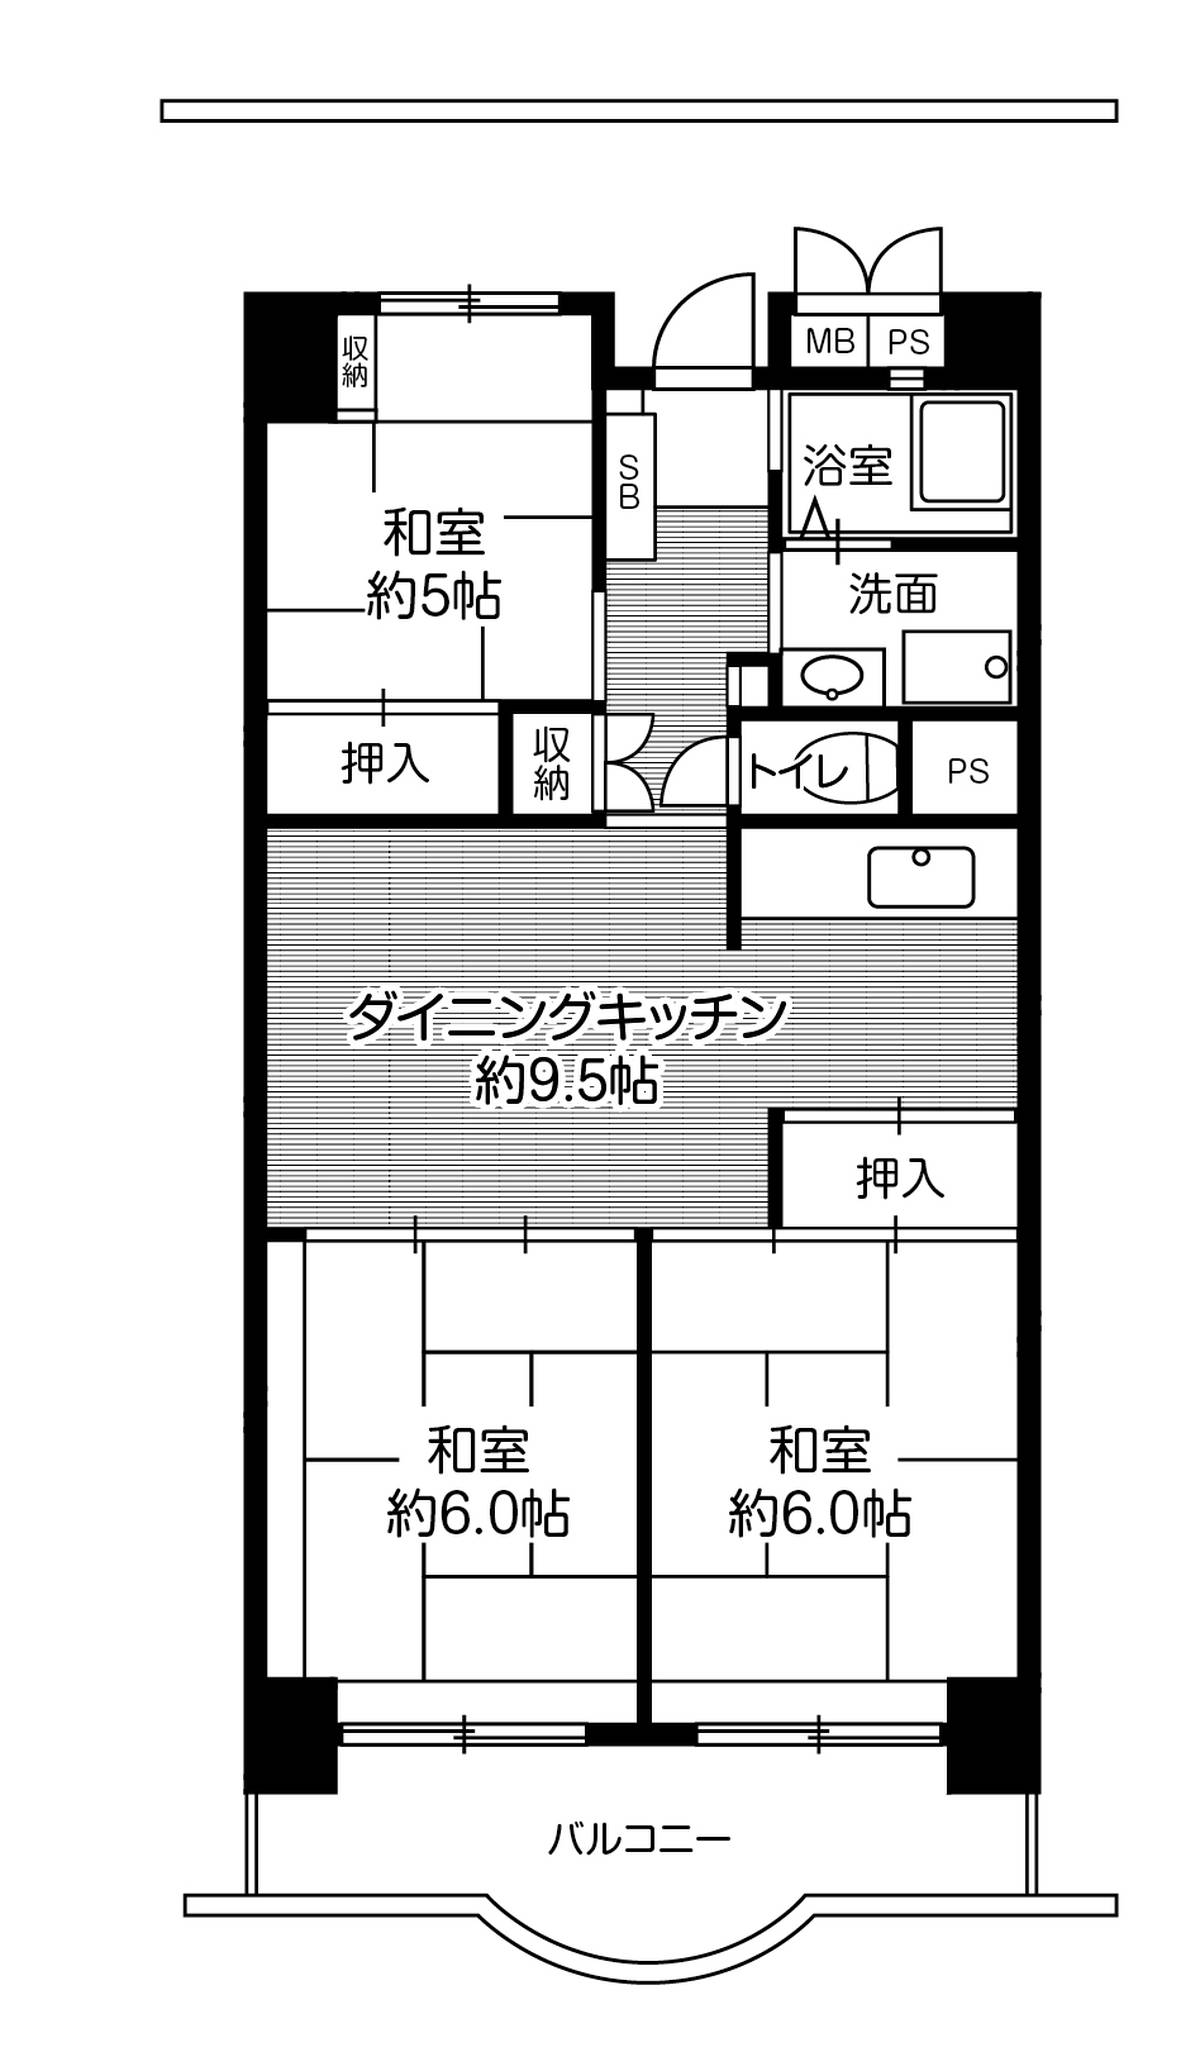 3DK floorplan of Village House Hamamatsu Tower in Chuo-ku